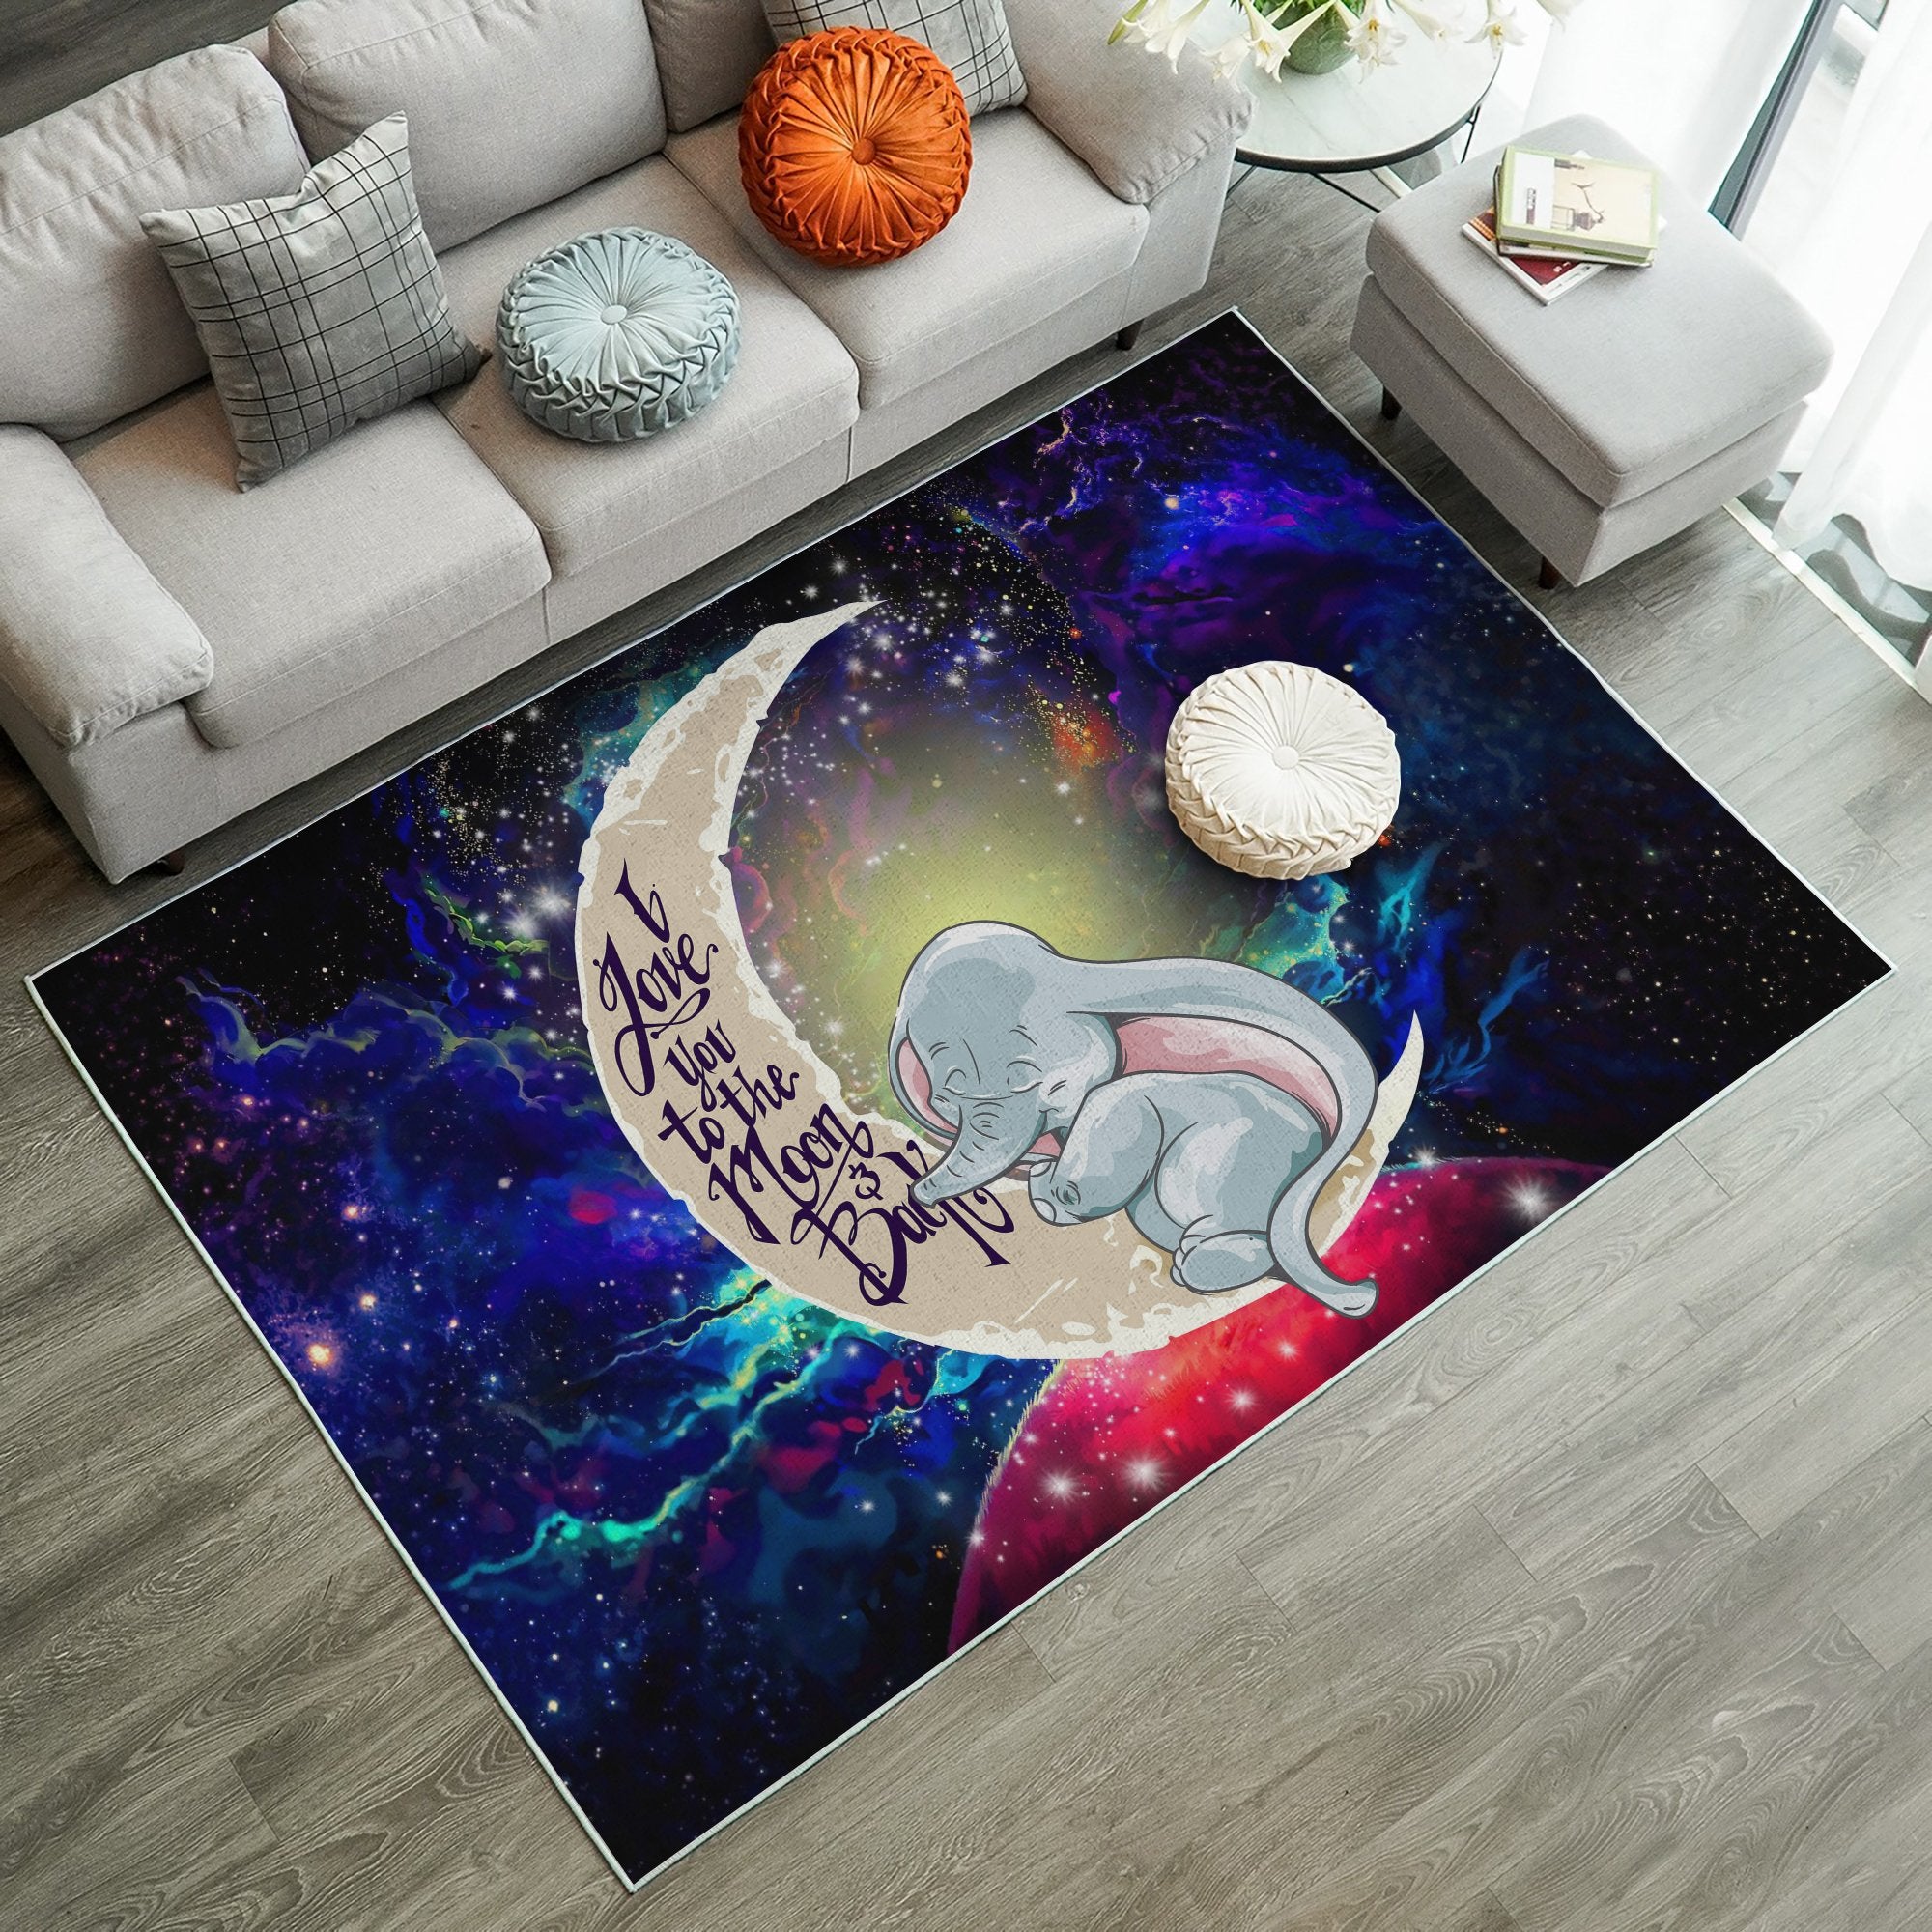 Dumbo Elephant Love You To The Moon Galaxy Carpet Rug Home Room Decor Nearkii